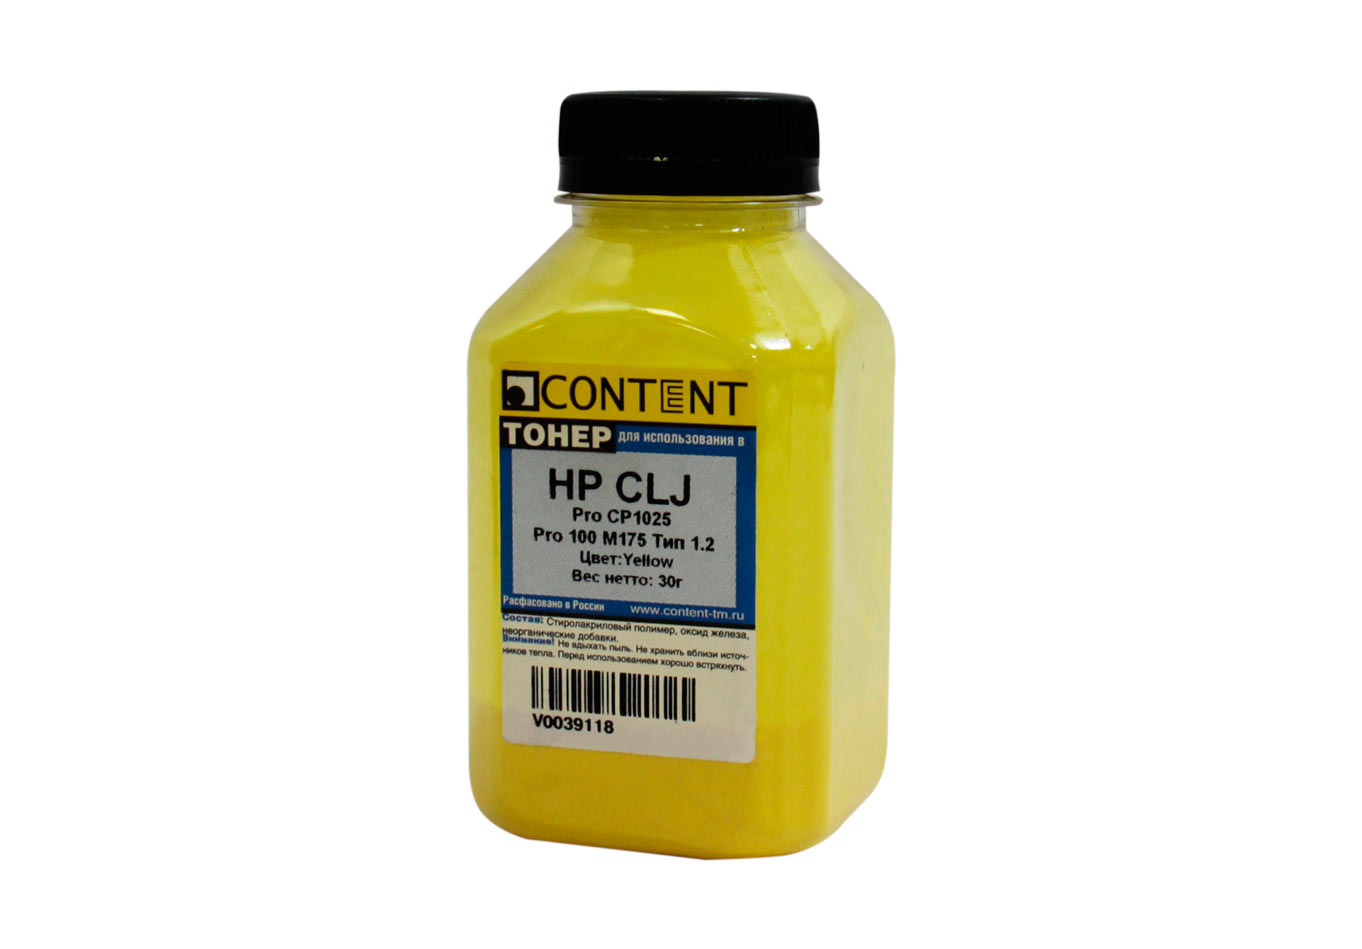 Тонер Content Тип 1.2, бутыль 30 г, желтый, совместимый для CLJ Pro CP1025, Pro 100 M175 (V0039118)